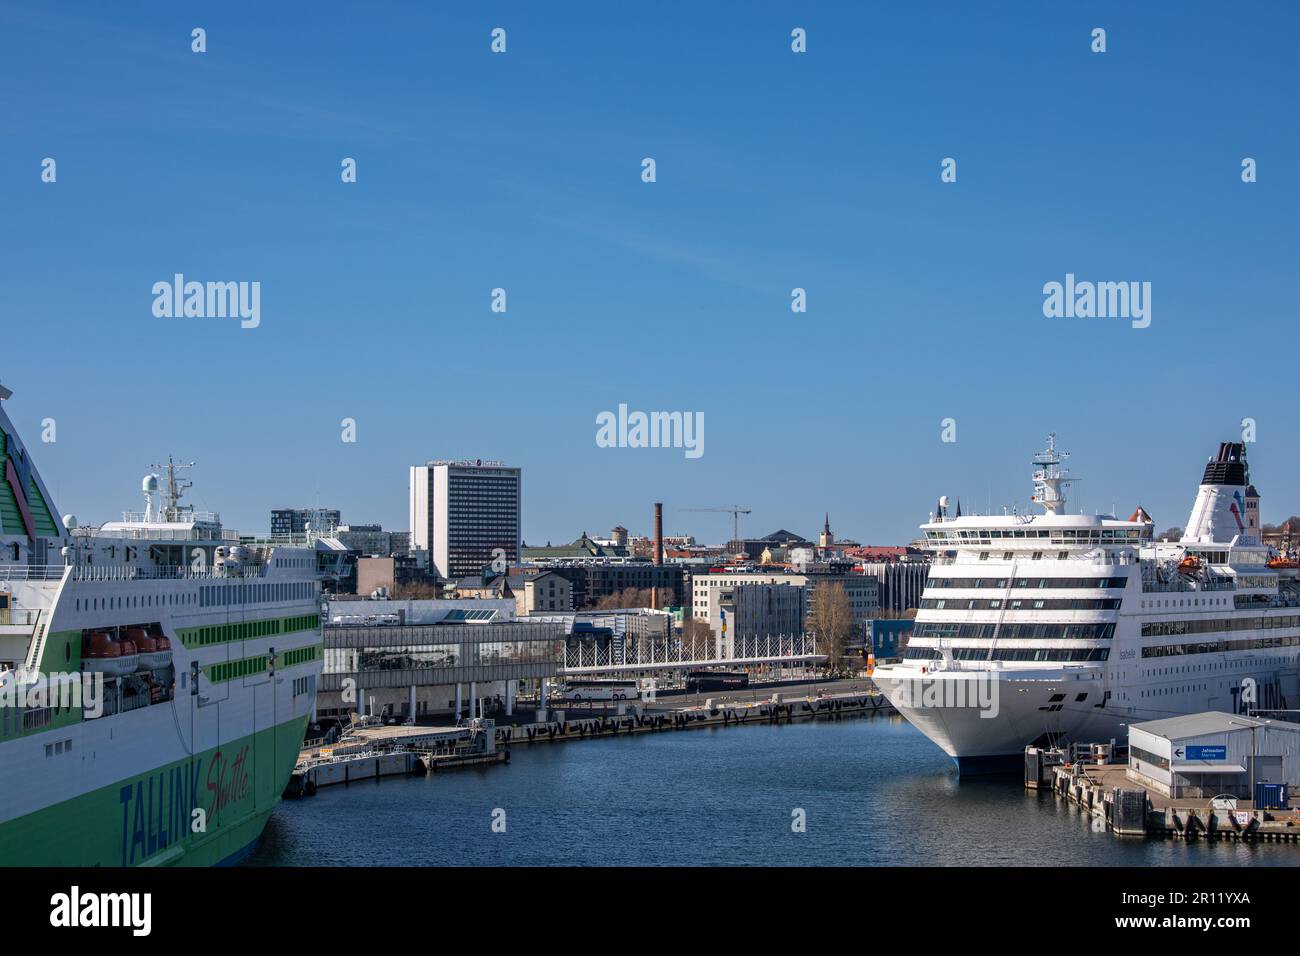 Ormeggiate navi da crociera Tallink nel porto passeggeri o reisisadam a Tallinn, Estonia Foto Stock